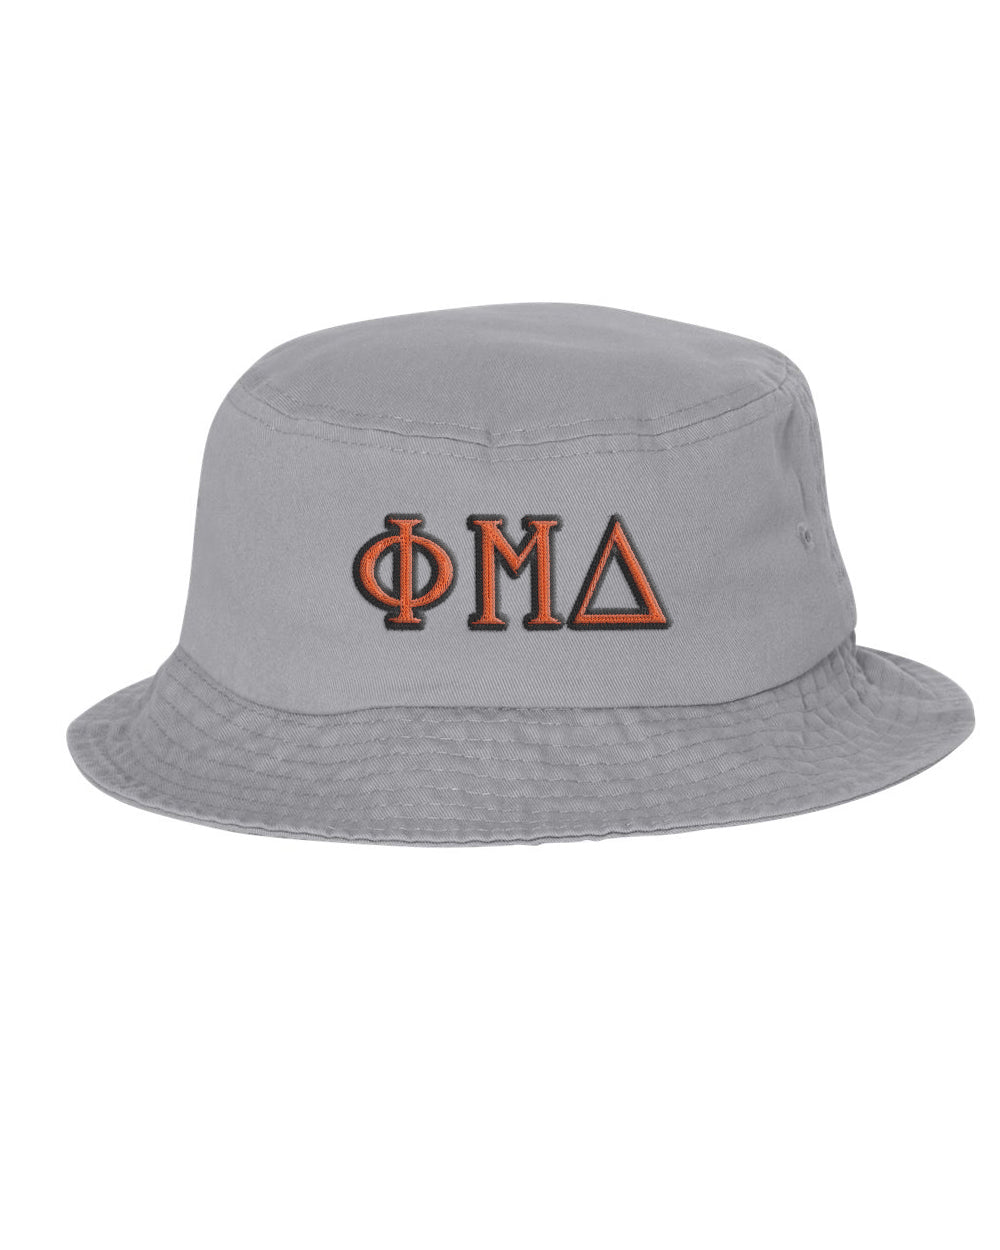 Phi Mu Delta Embroidered Bucket Hat